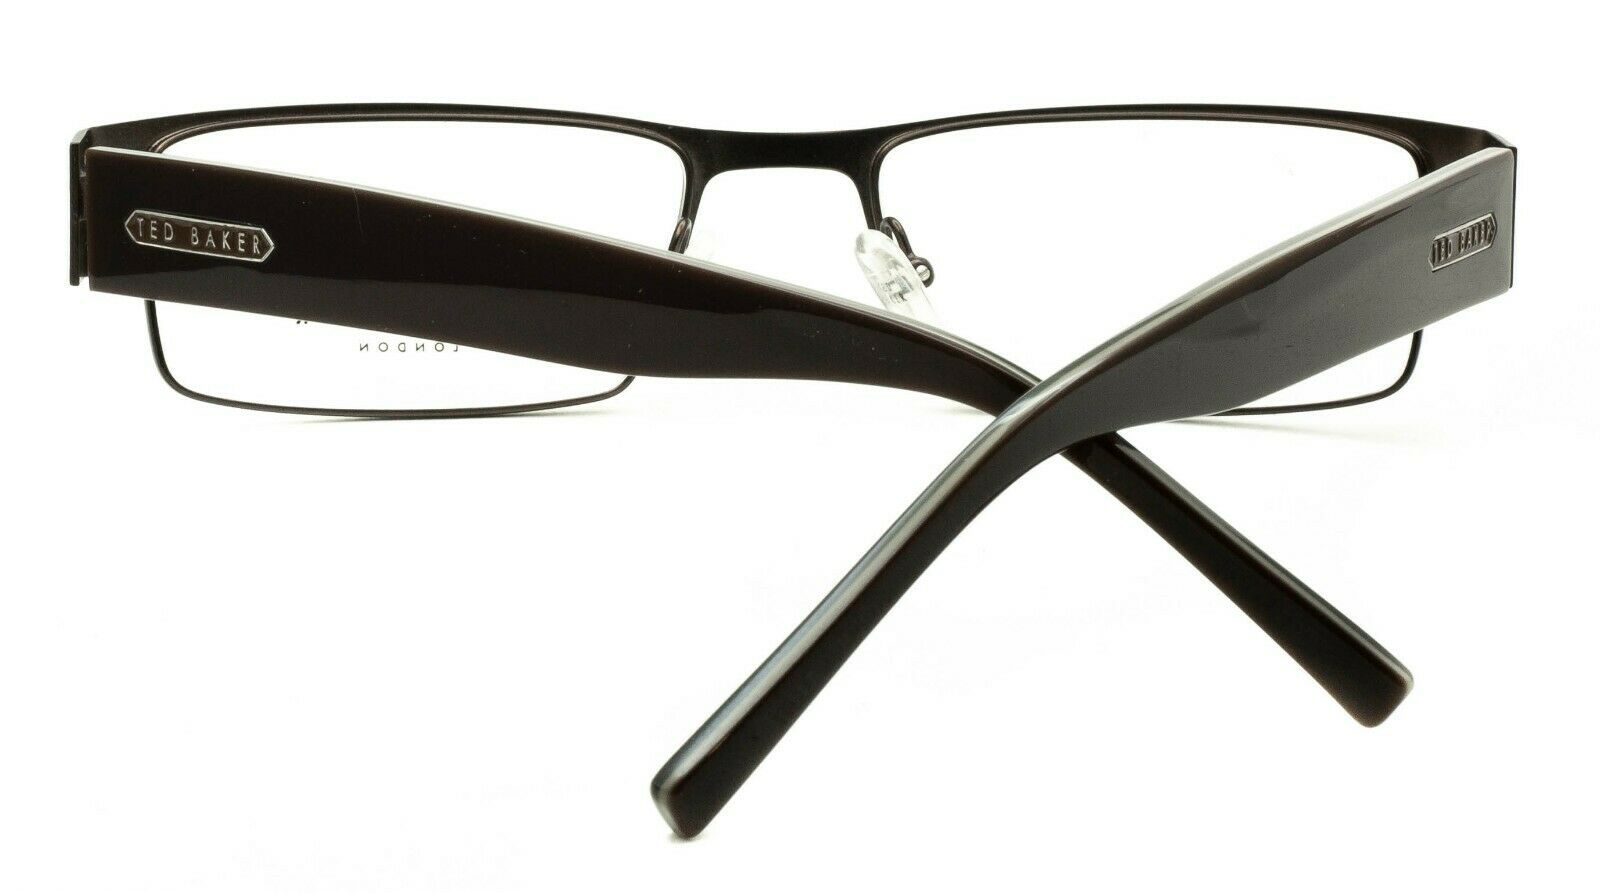 TED BAKER 4175 111 Black Horse 53mm Eyewear Glasses Eyeglasses RX Optical - New